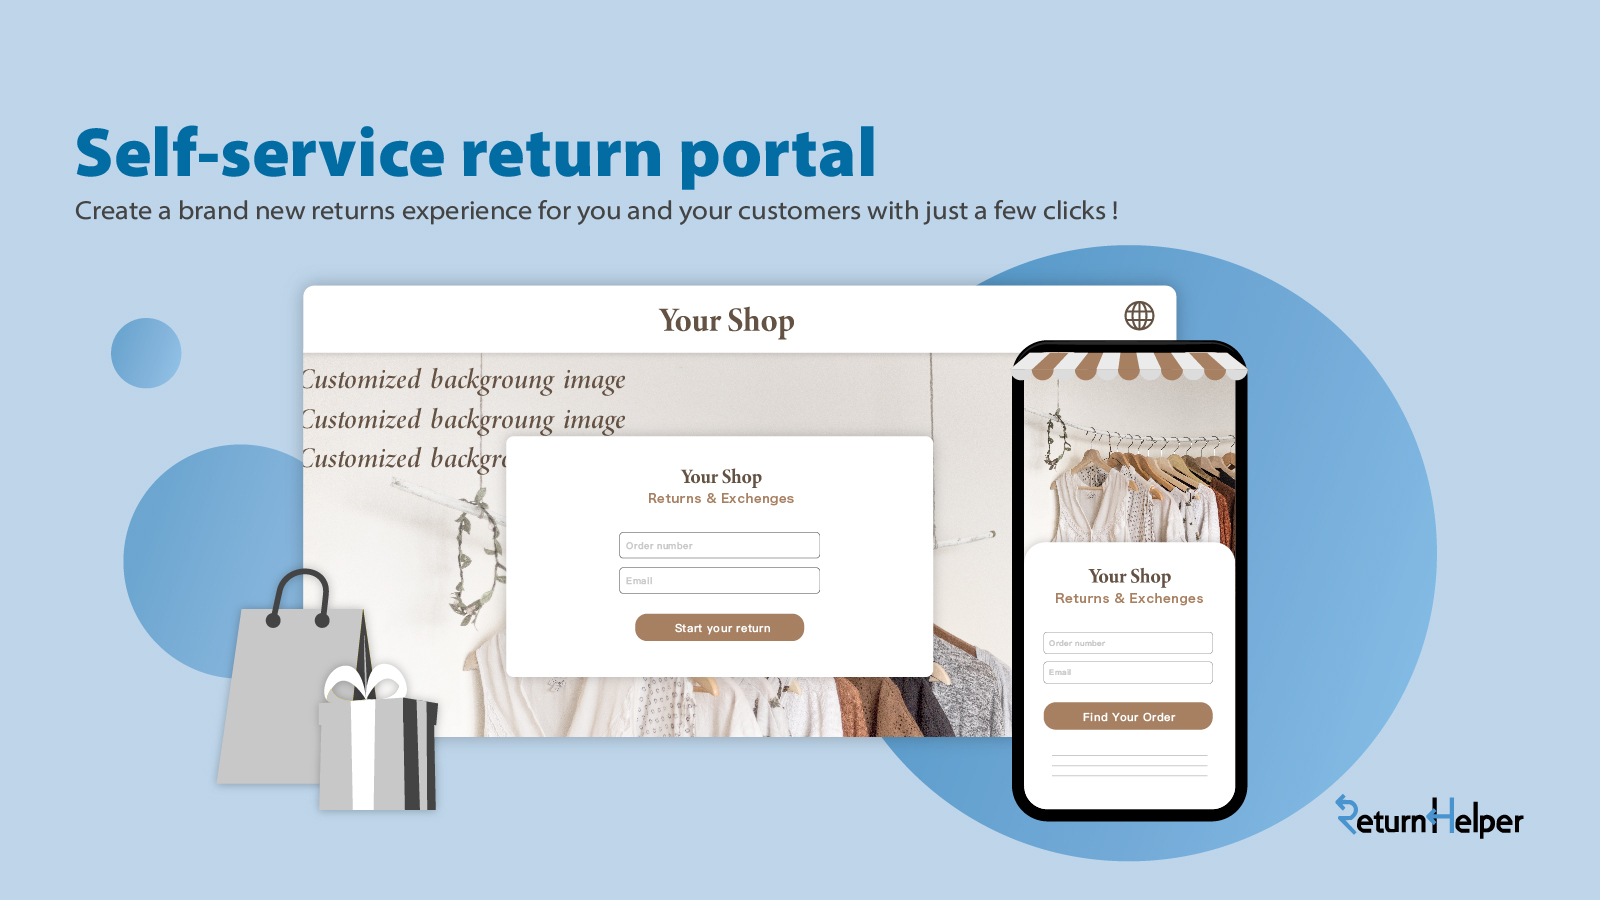 return helper's self-service return portal